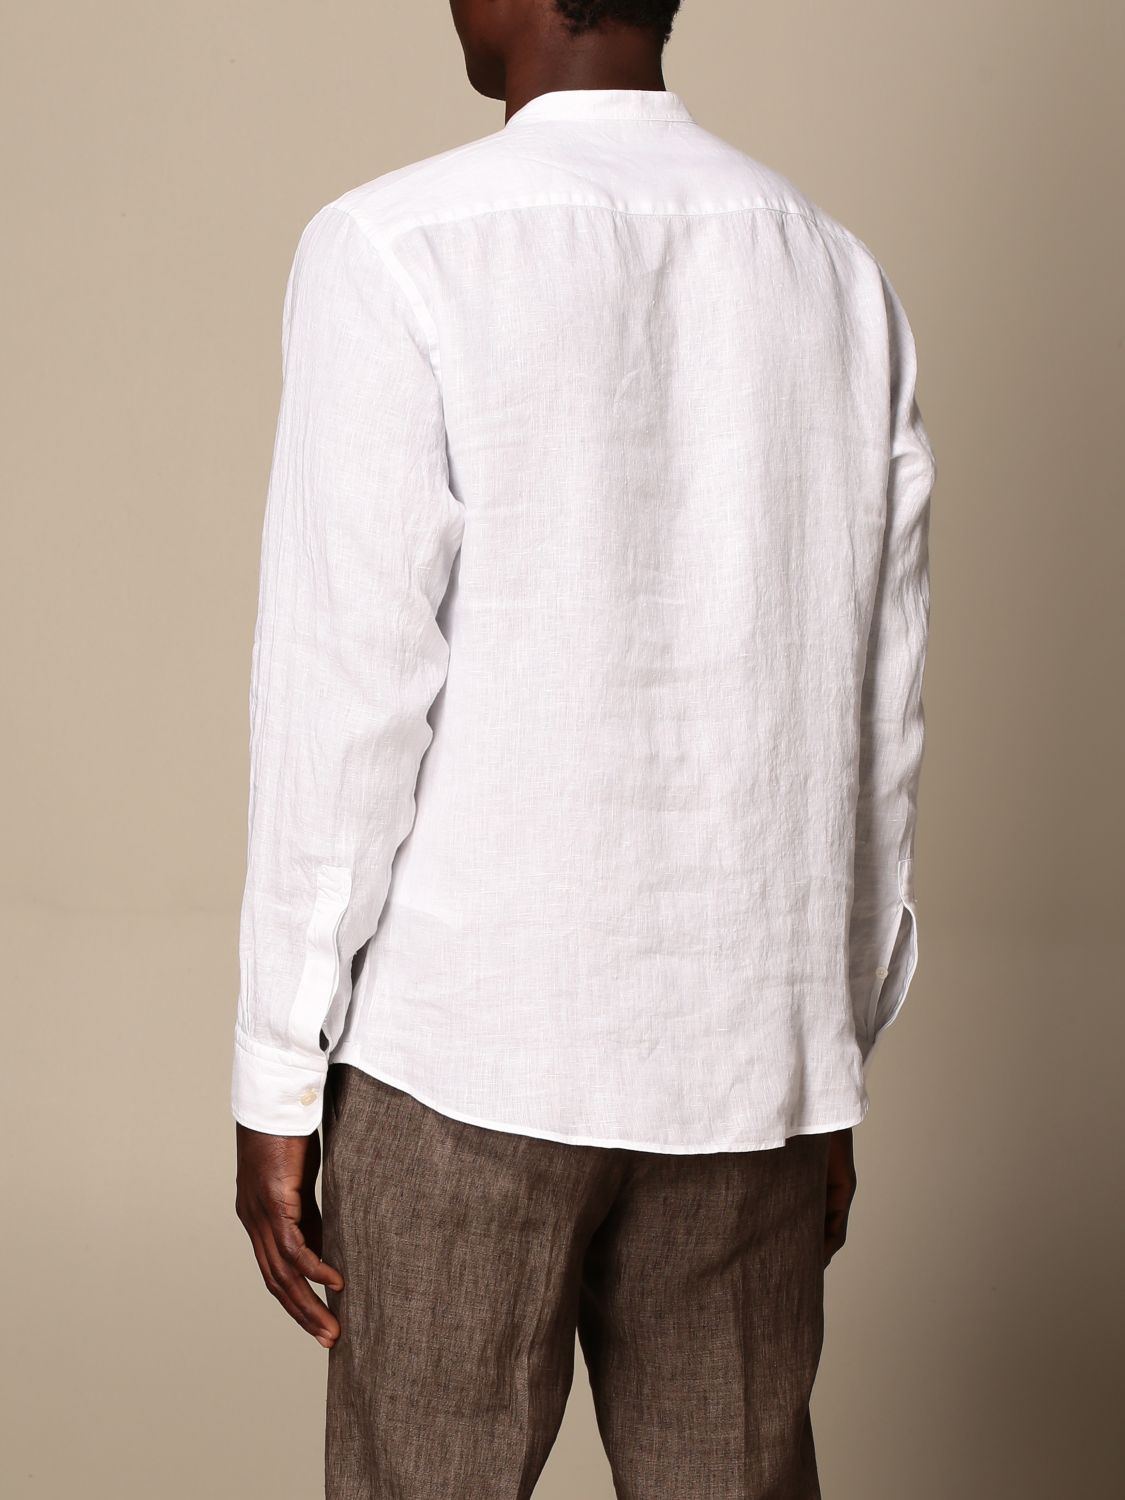 Shirt Z Zegna: Z Zegna shirt in washed linen with mandarin collar white 3